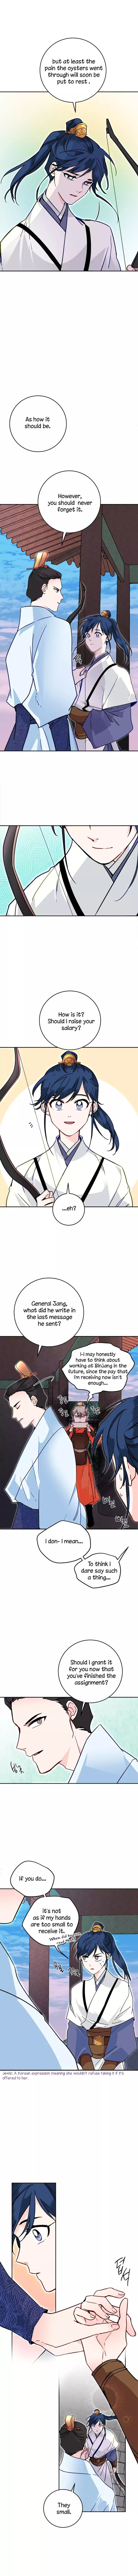 Yeon Lok Heun - Chapter 28 Page 7